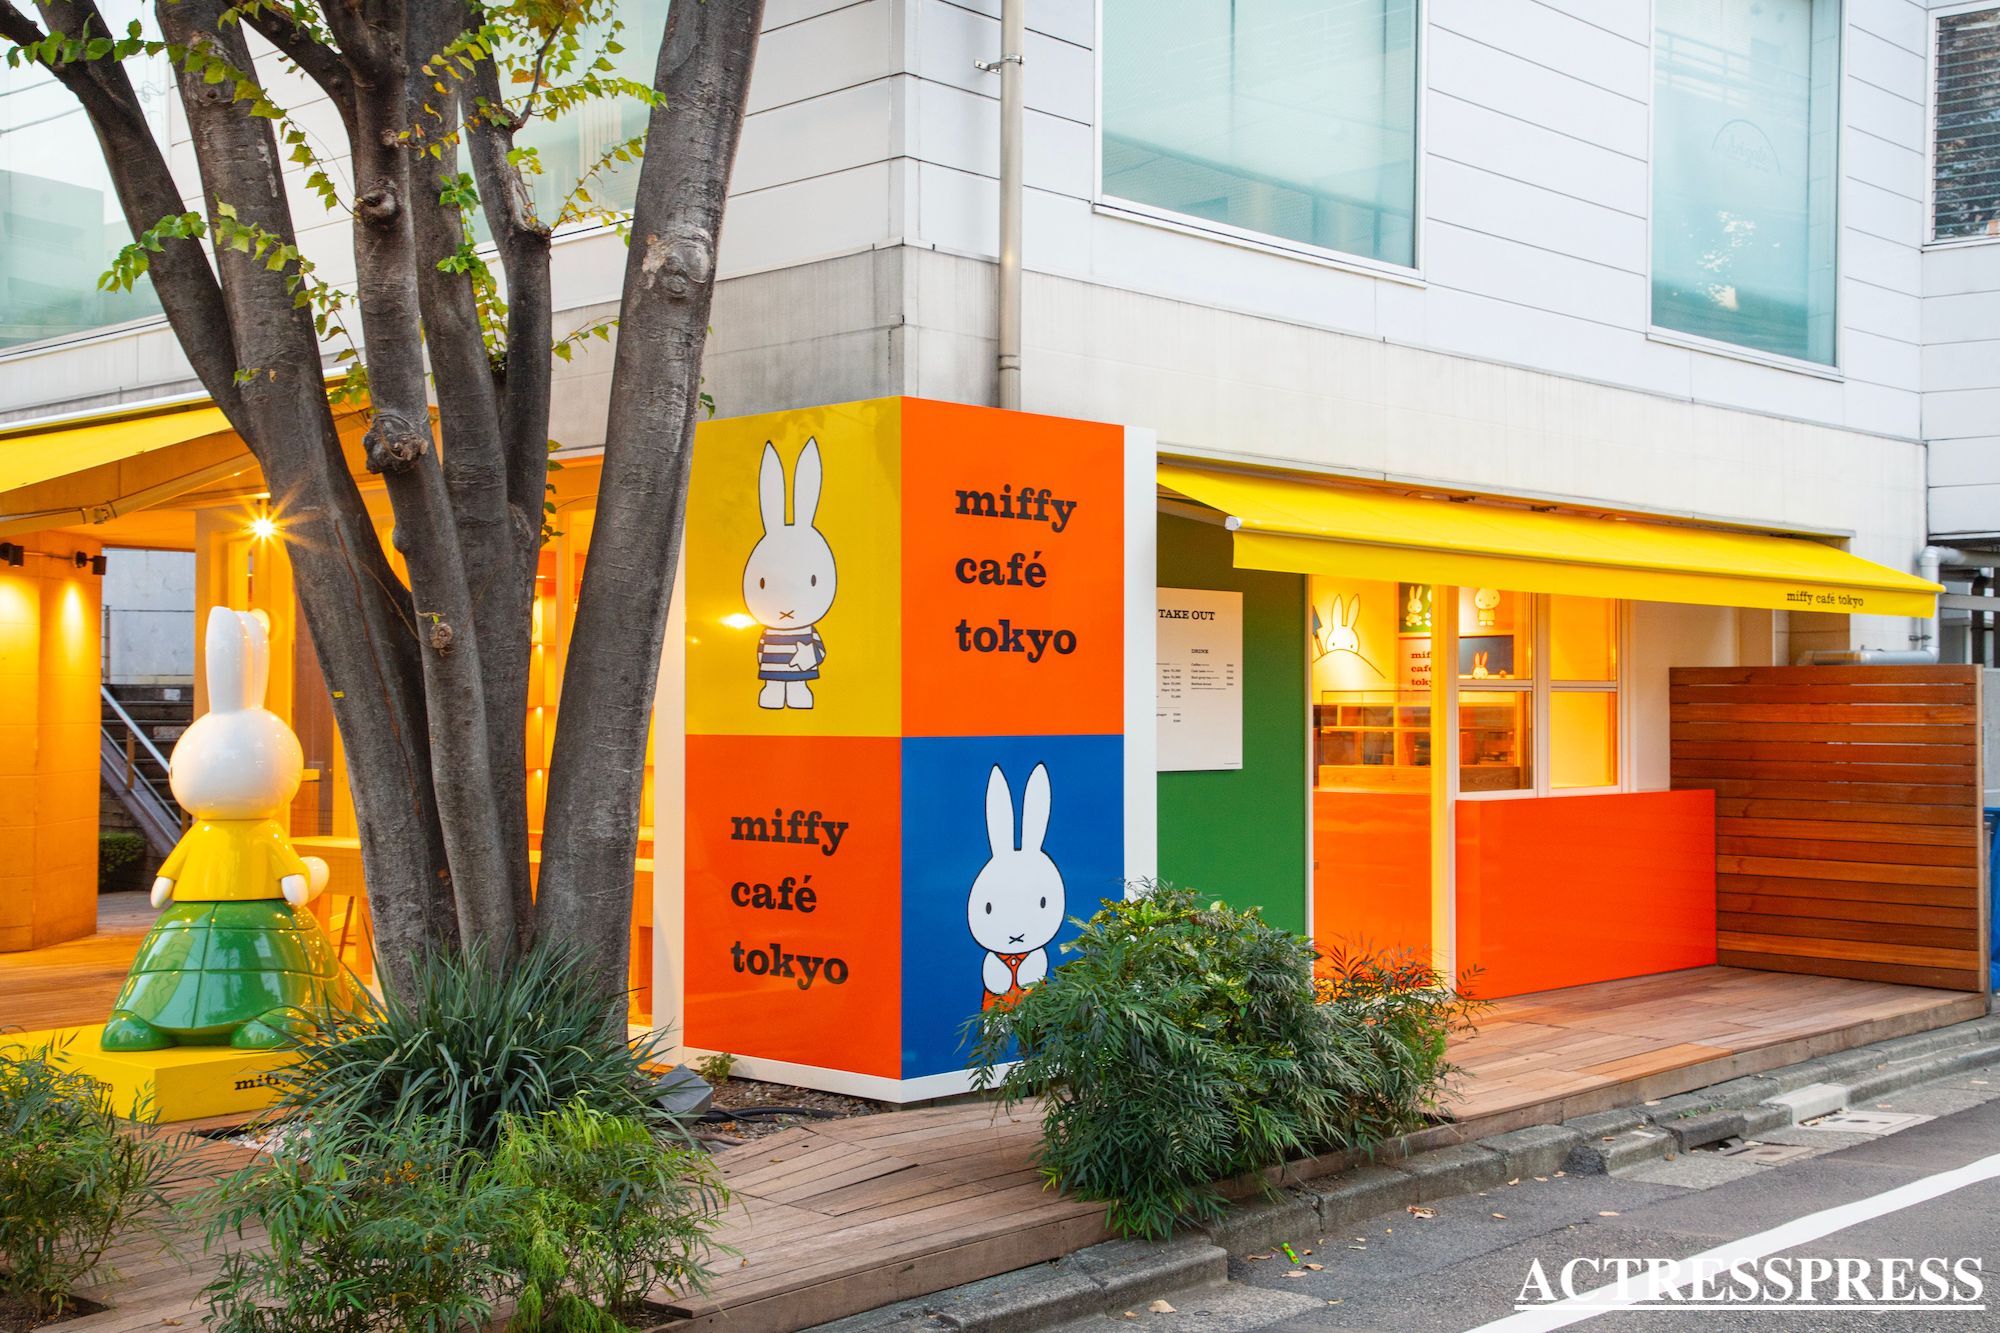 miffy café tokyo（ミッフィーカフェ トーキョー）​​代官山